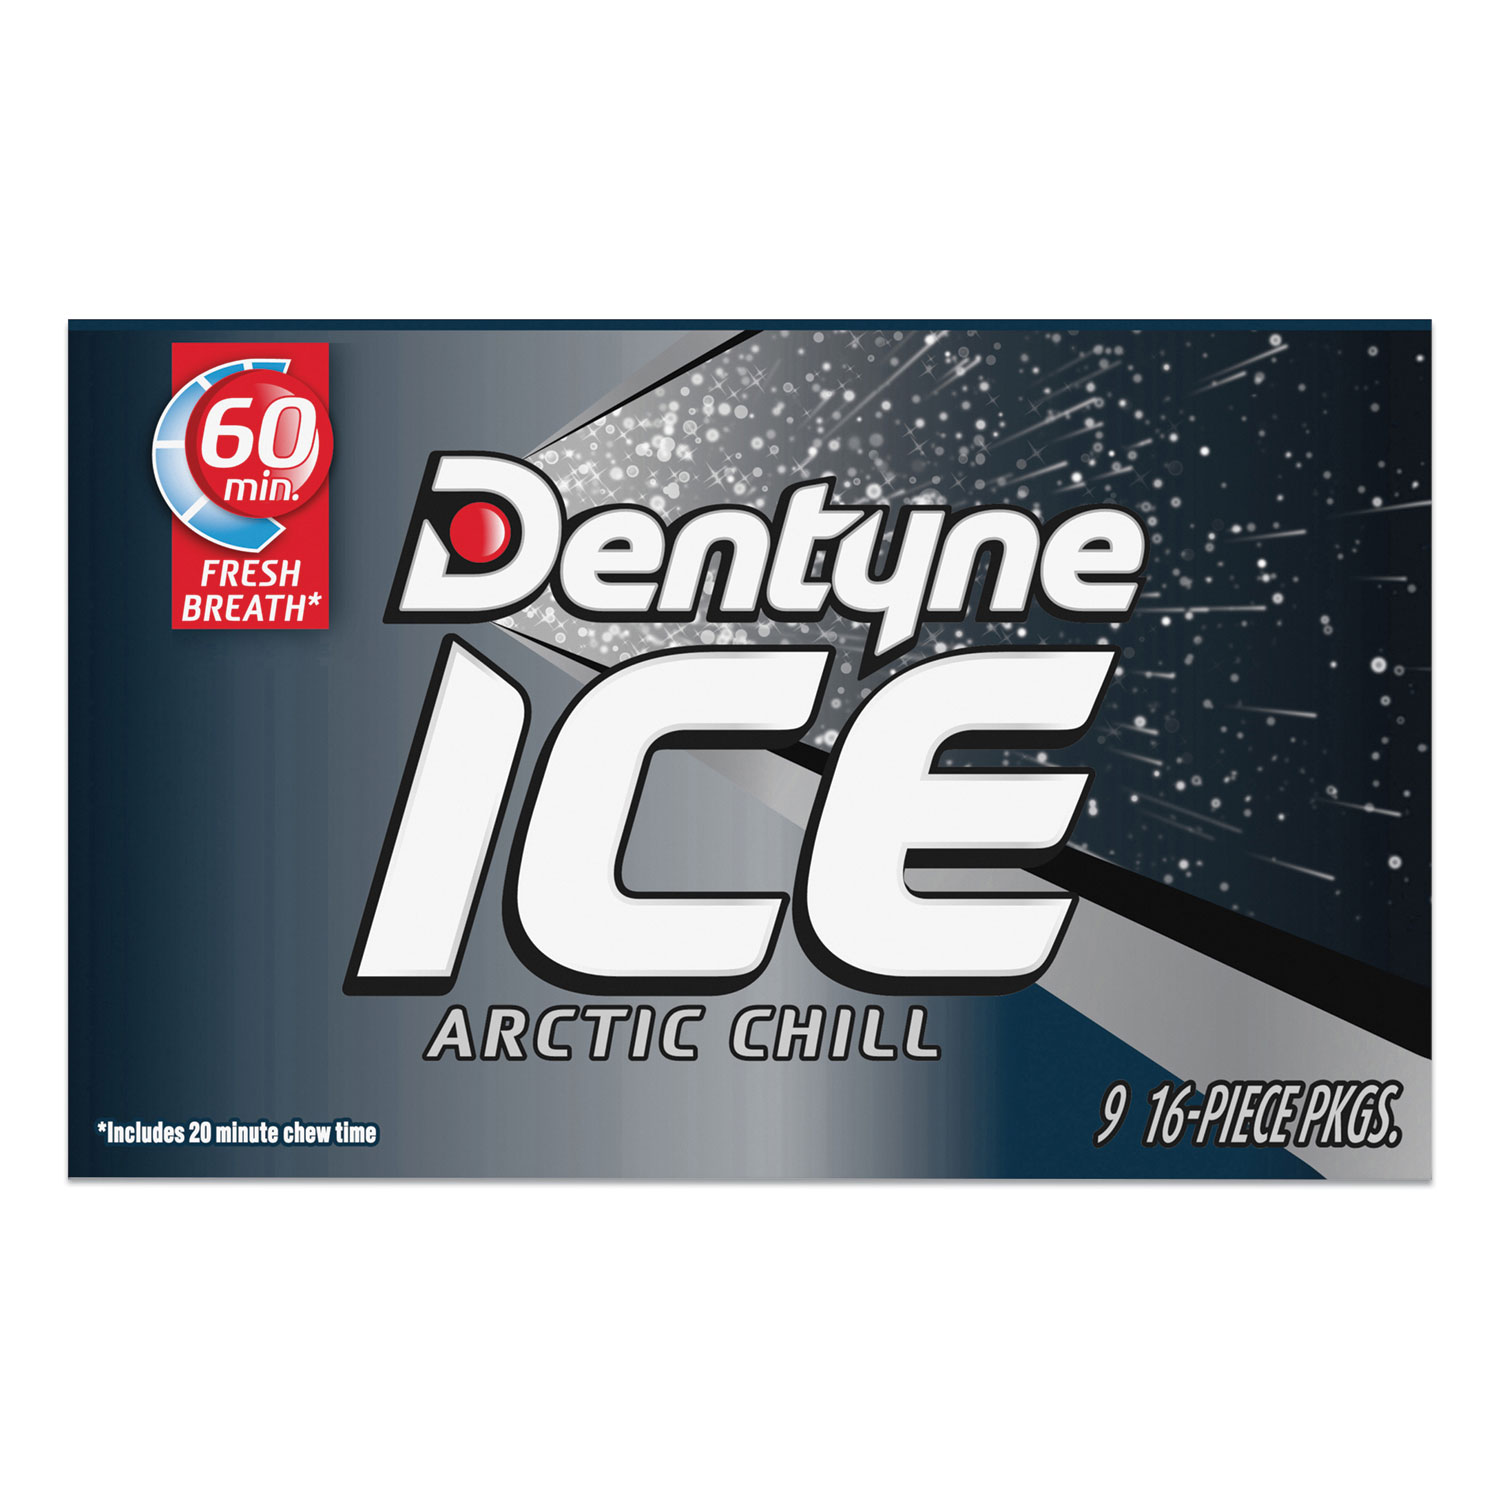  Dentyne Ice AMC31240 Sugarless Gum, Arctic Chill, 16 Pieces/Pack, 9 Packs/Box (MDZ2051025) 